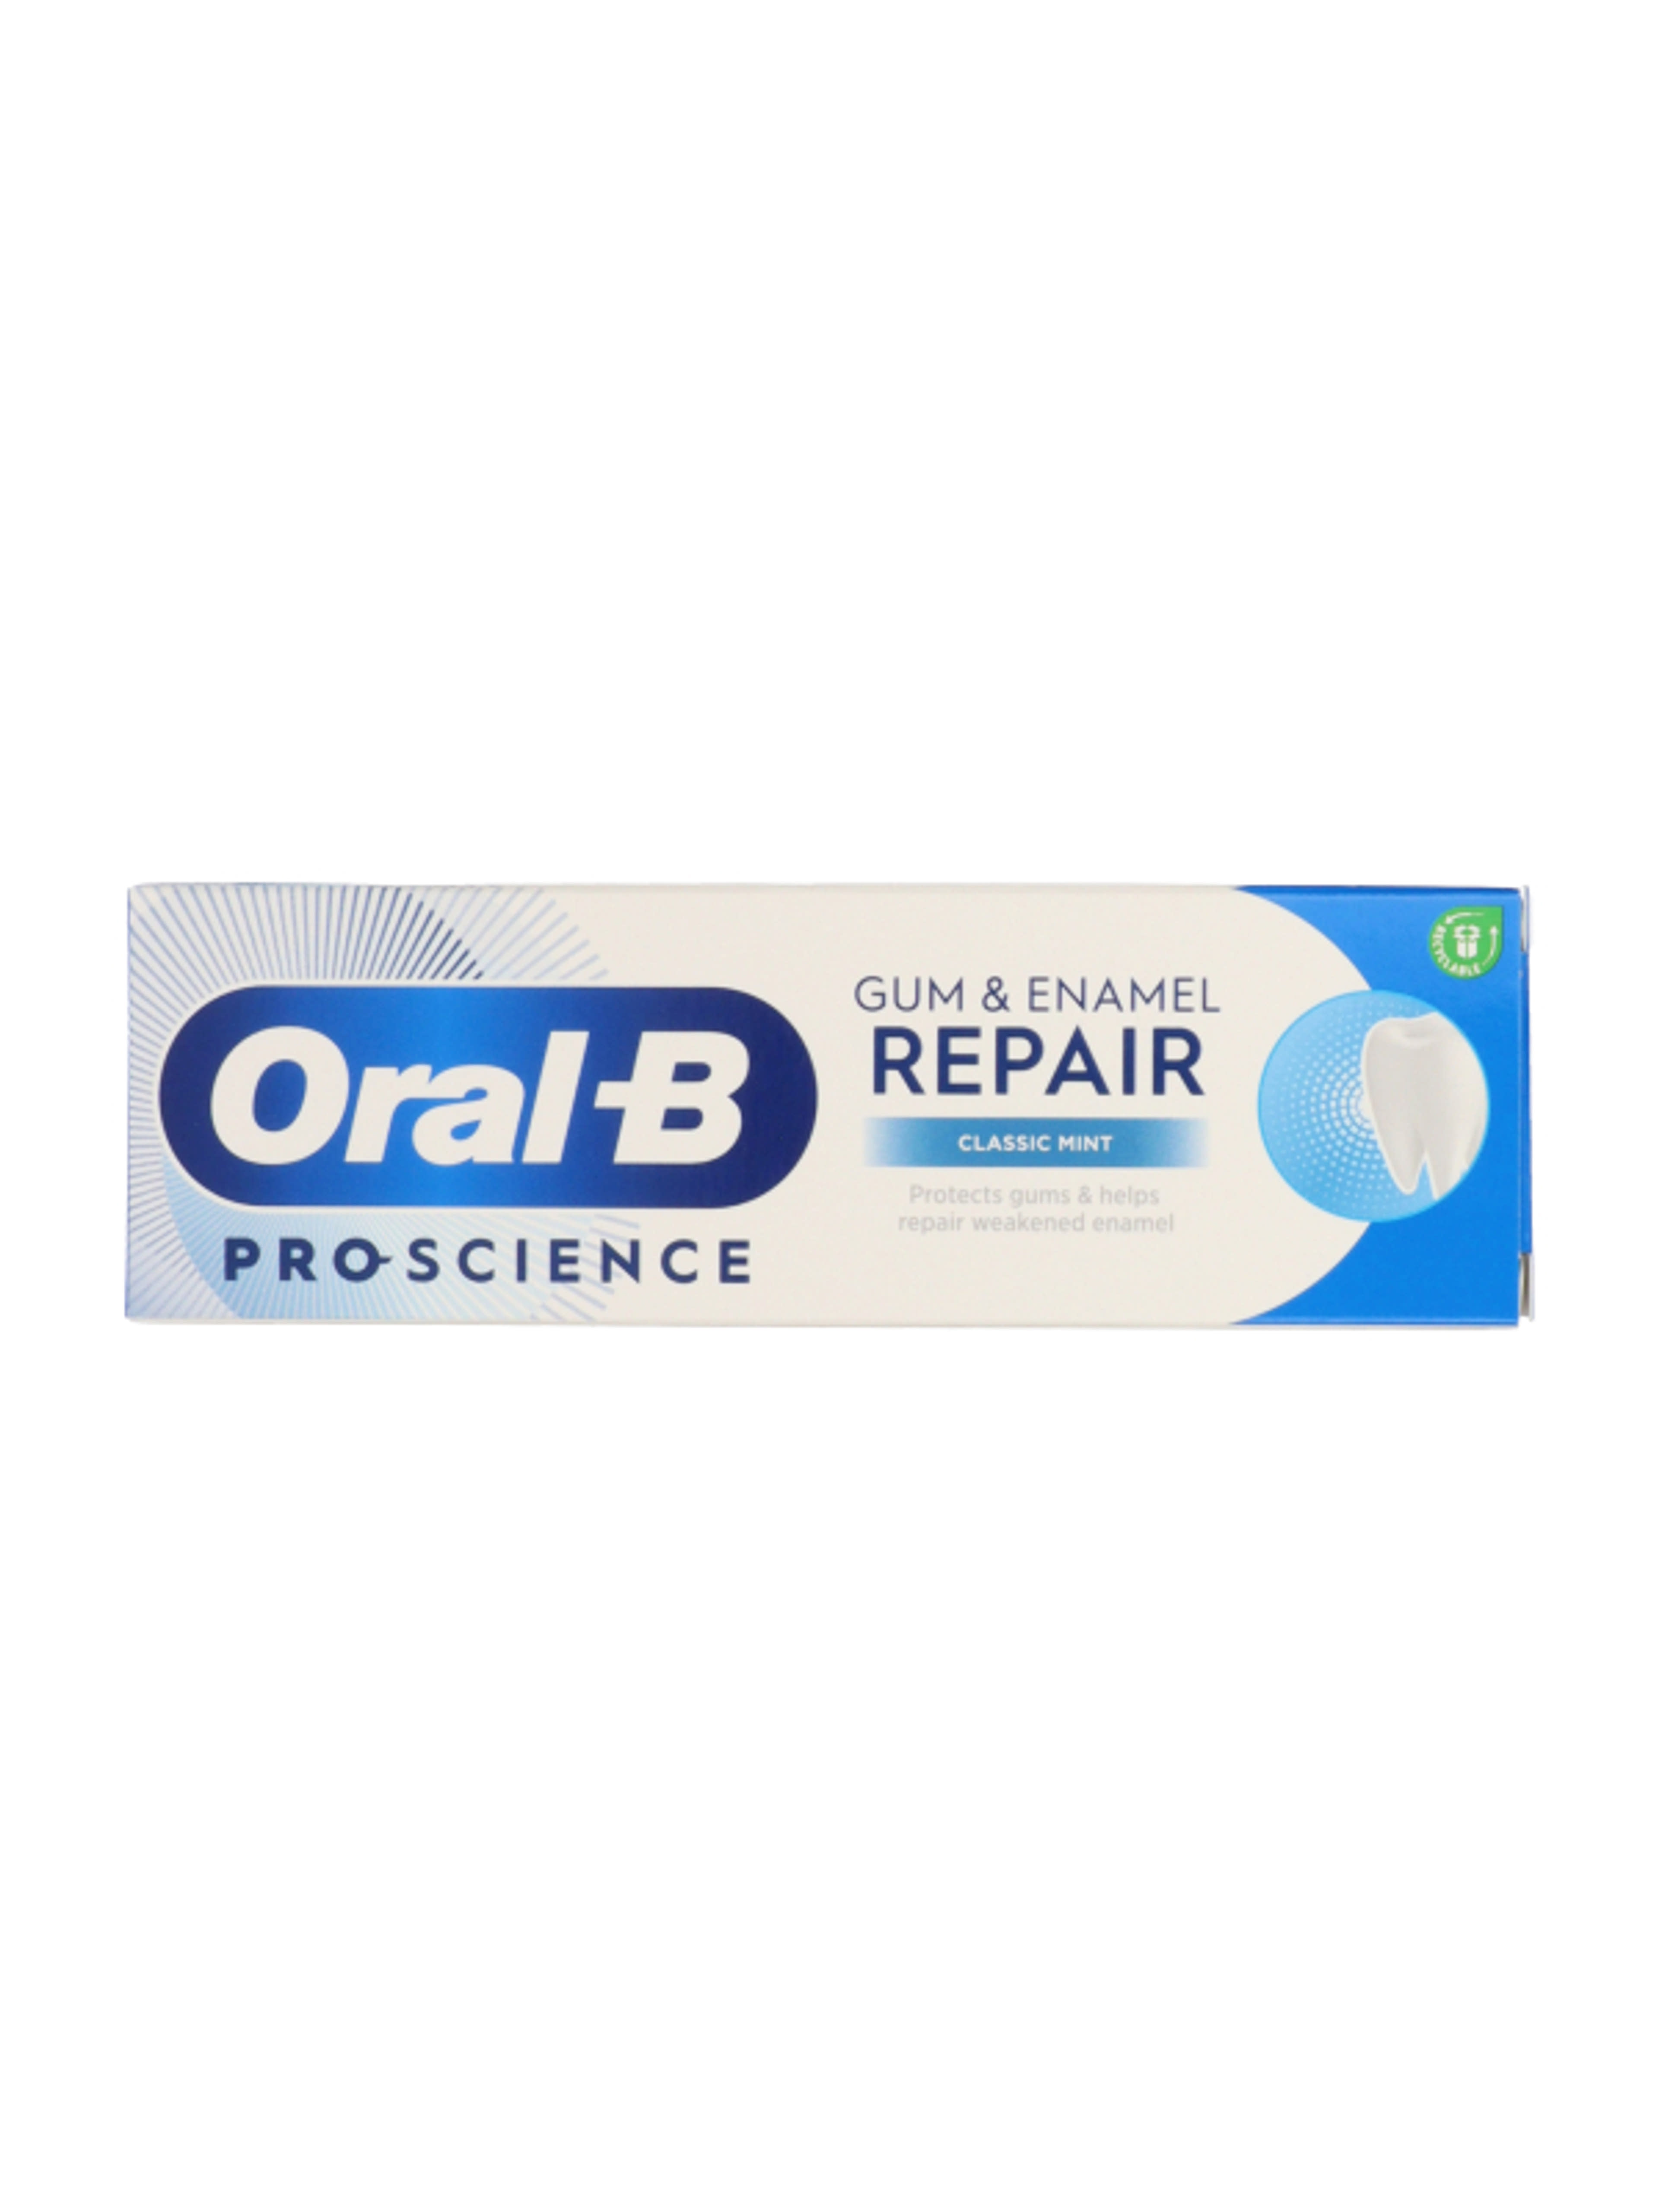 Oral-B Pro-Science Gum & Enamel Repair Original fogkrém - 75 ml-3